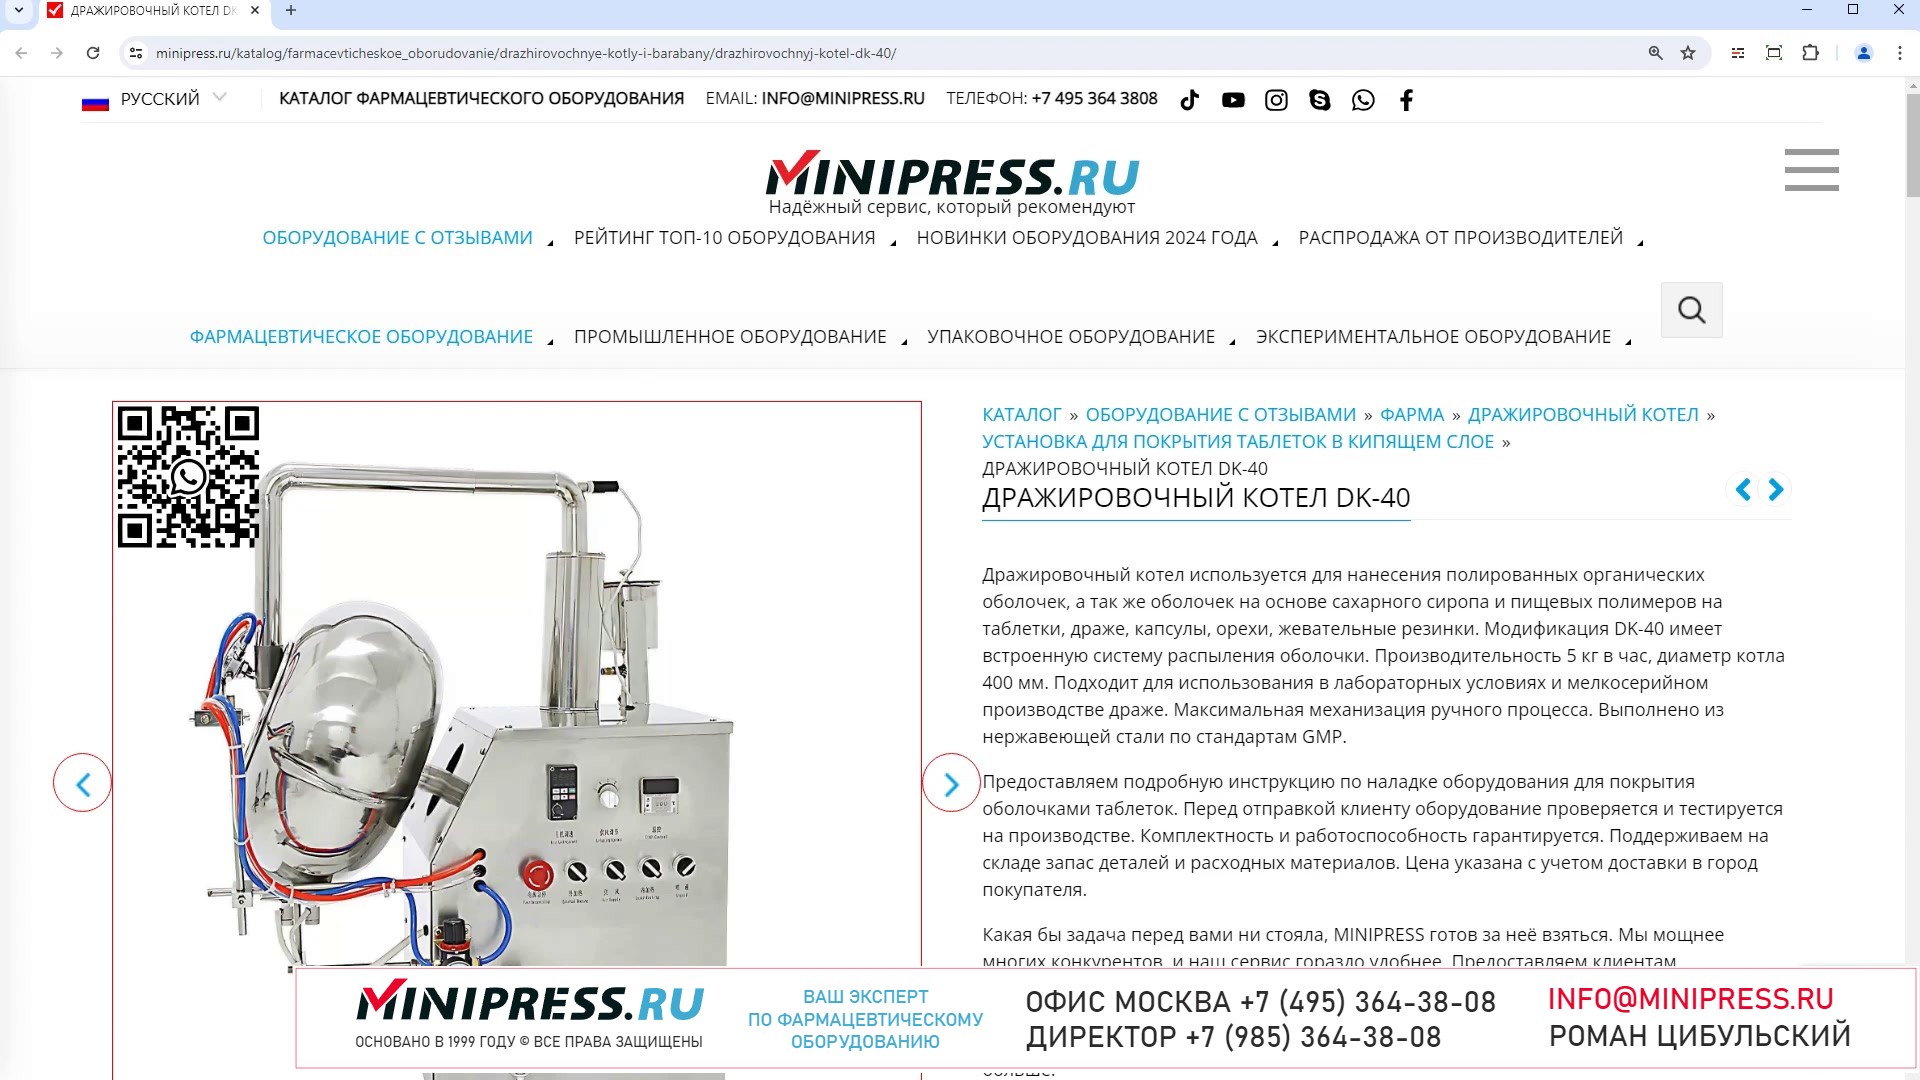 Minipress.ru Дражировочный котел DK-40